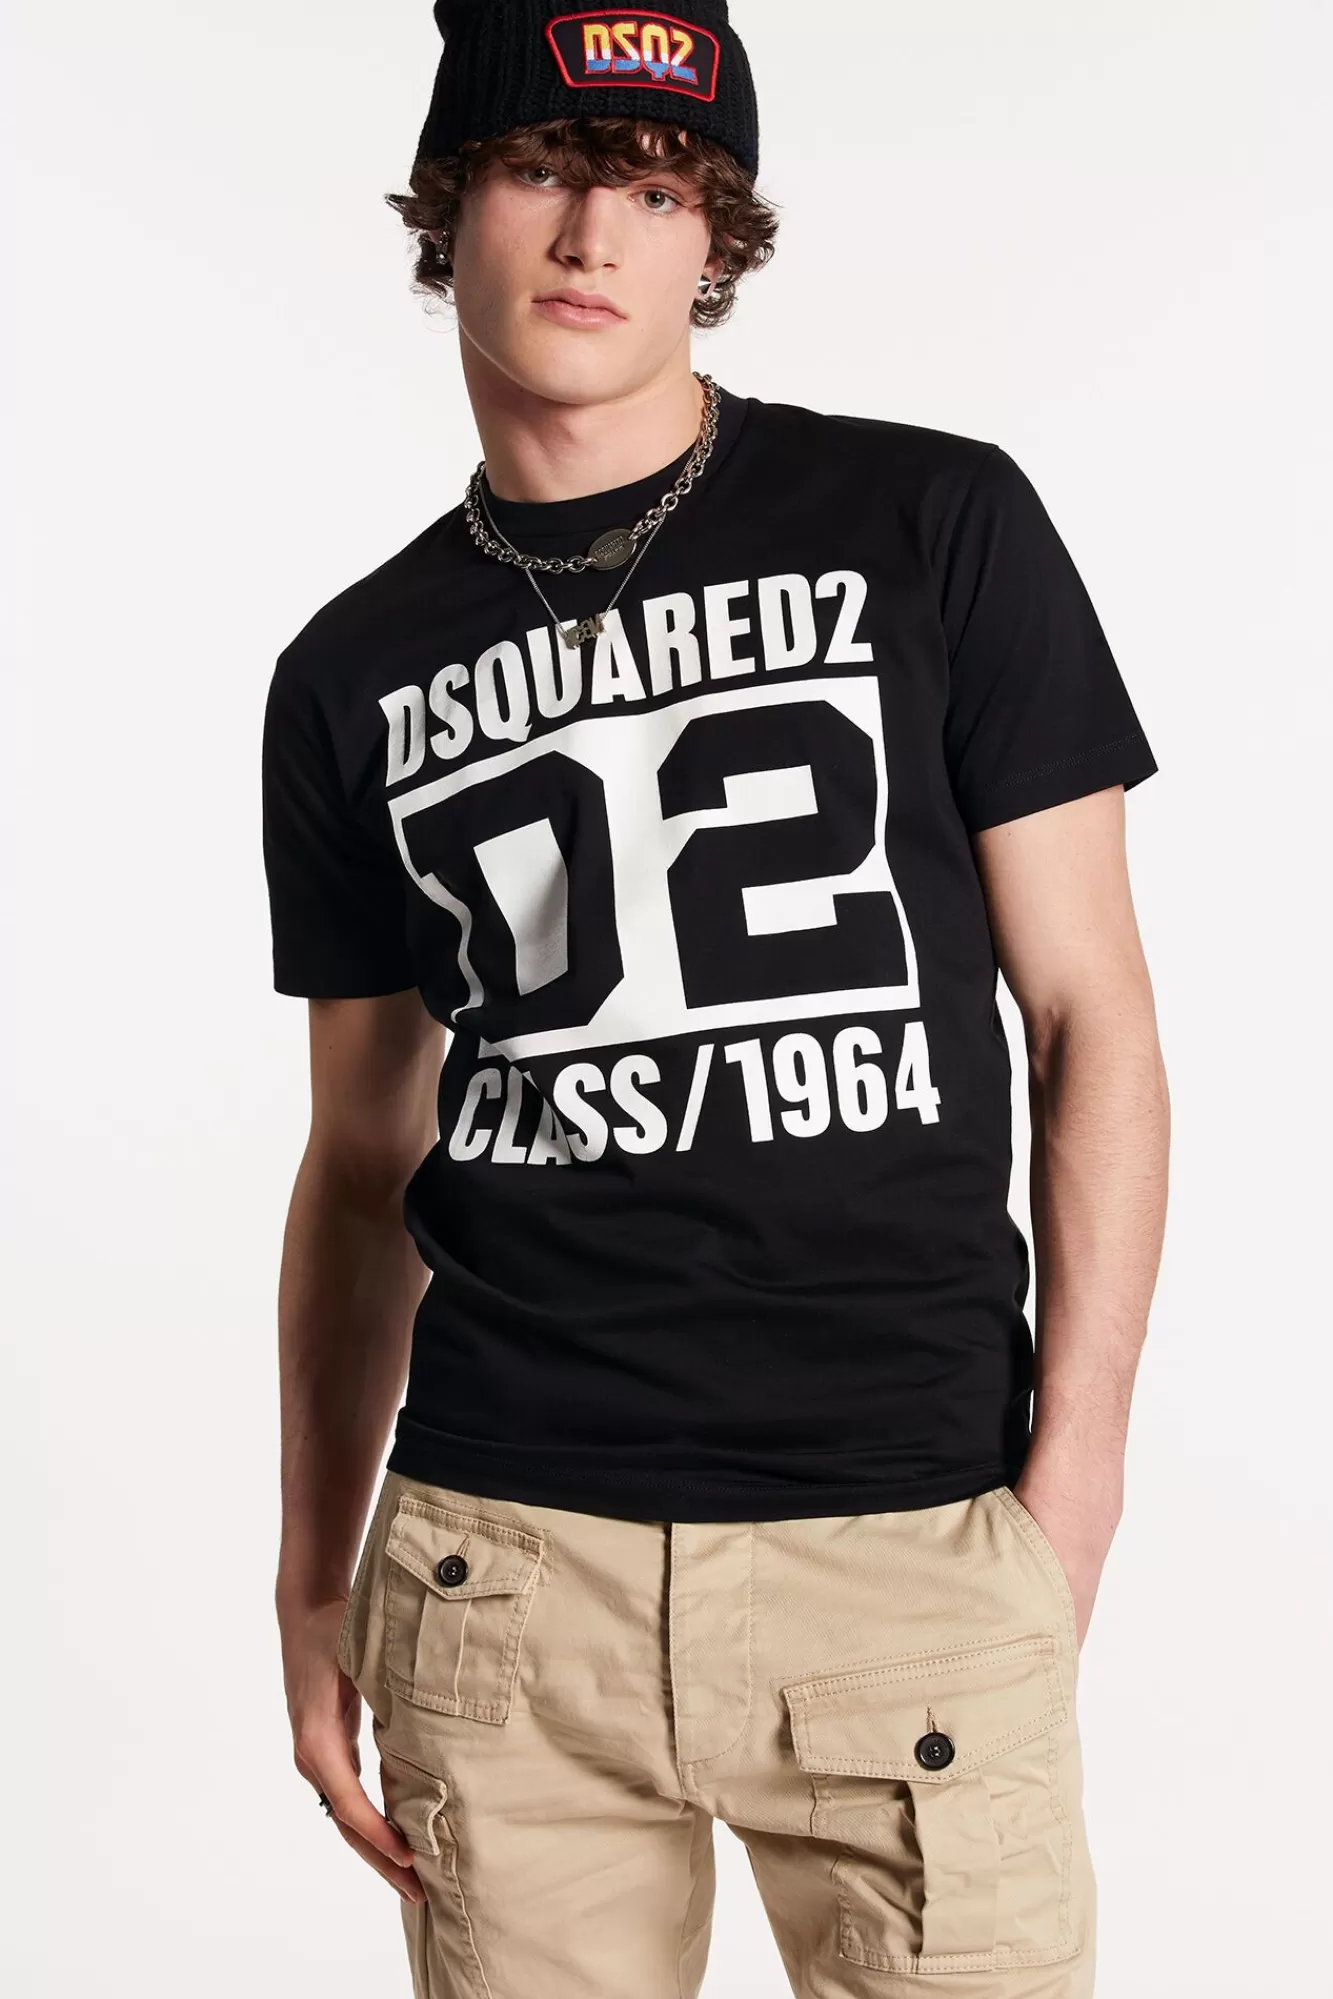 D2 Class 1964 Cool T-Shirt<Dsquared2 Online